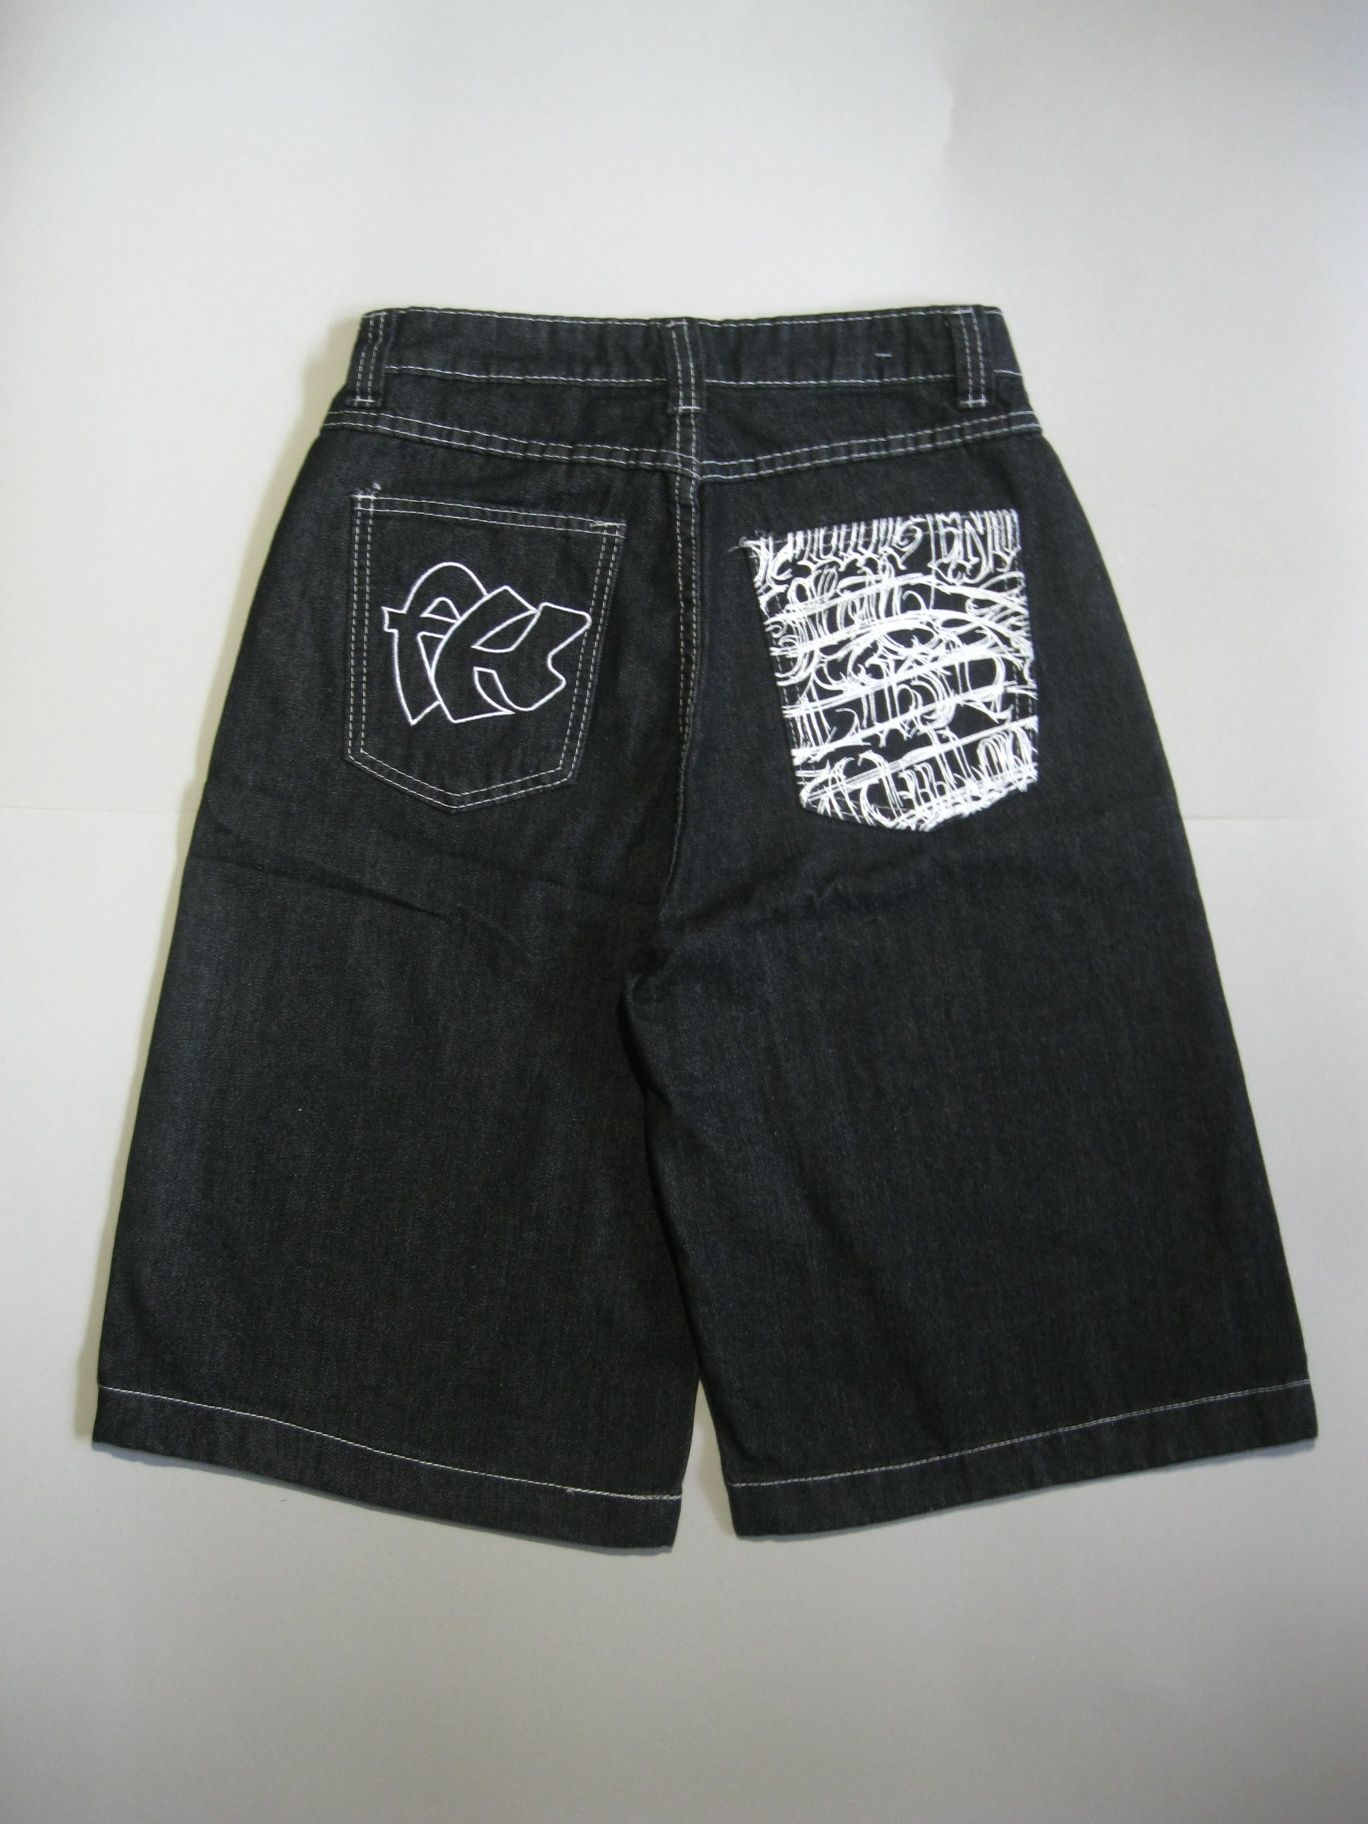 rap sk8 shorts / шорти